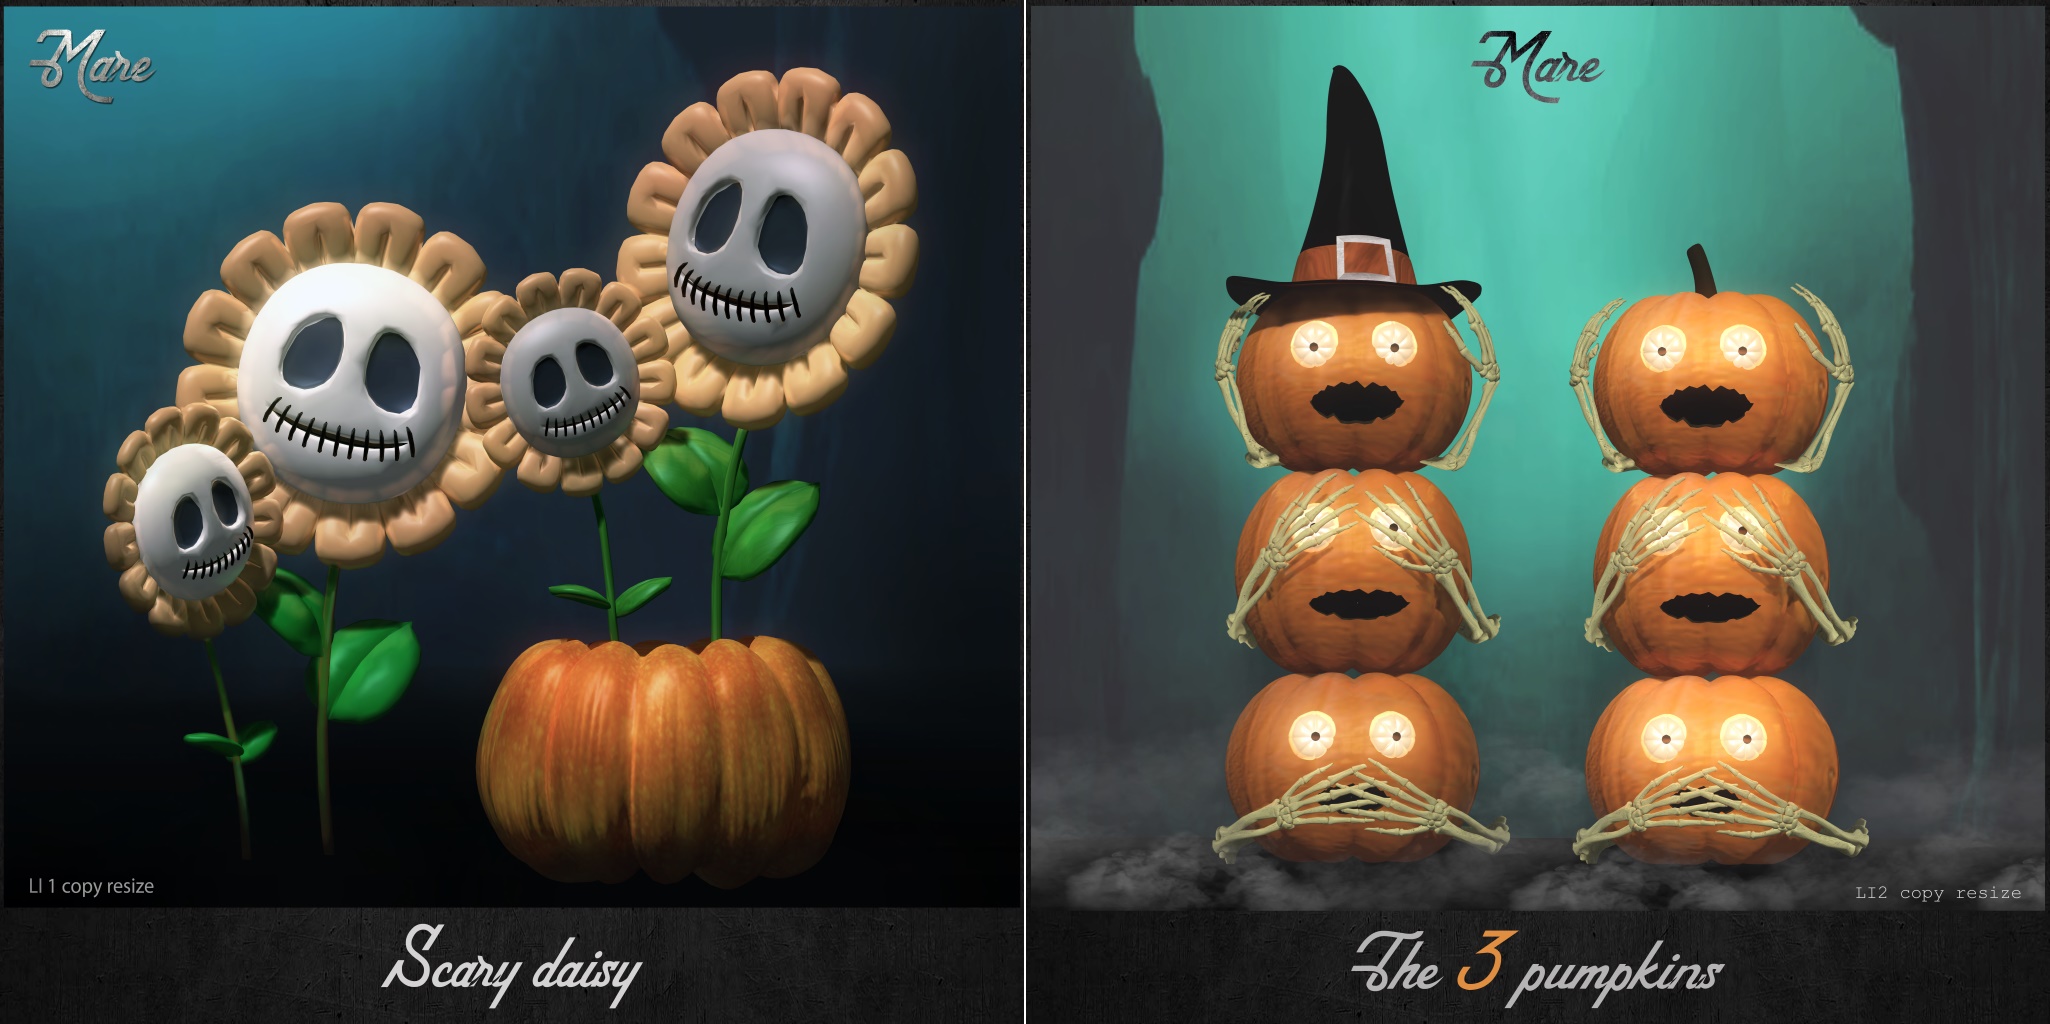 Mare – Scary Daisy & The 3 Pumpkins